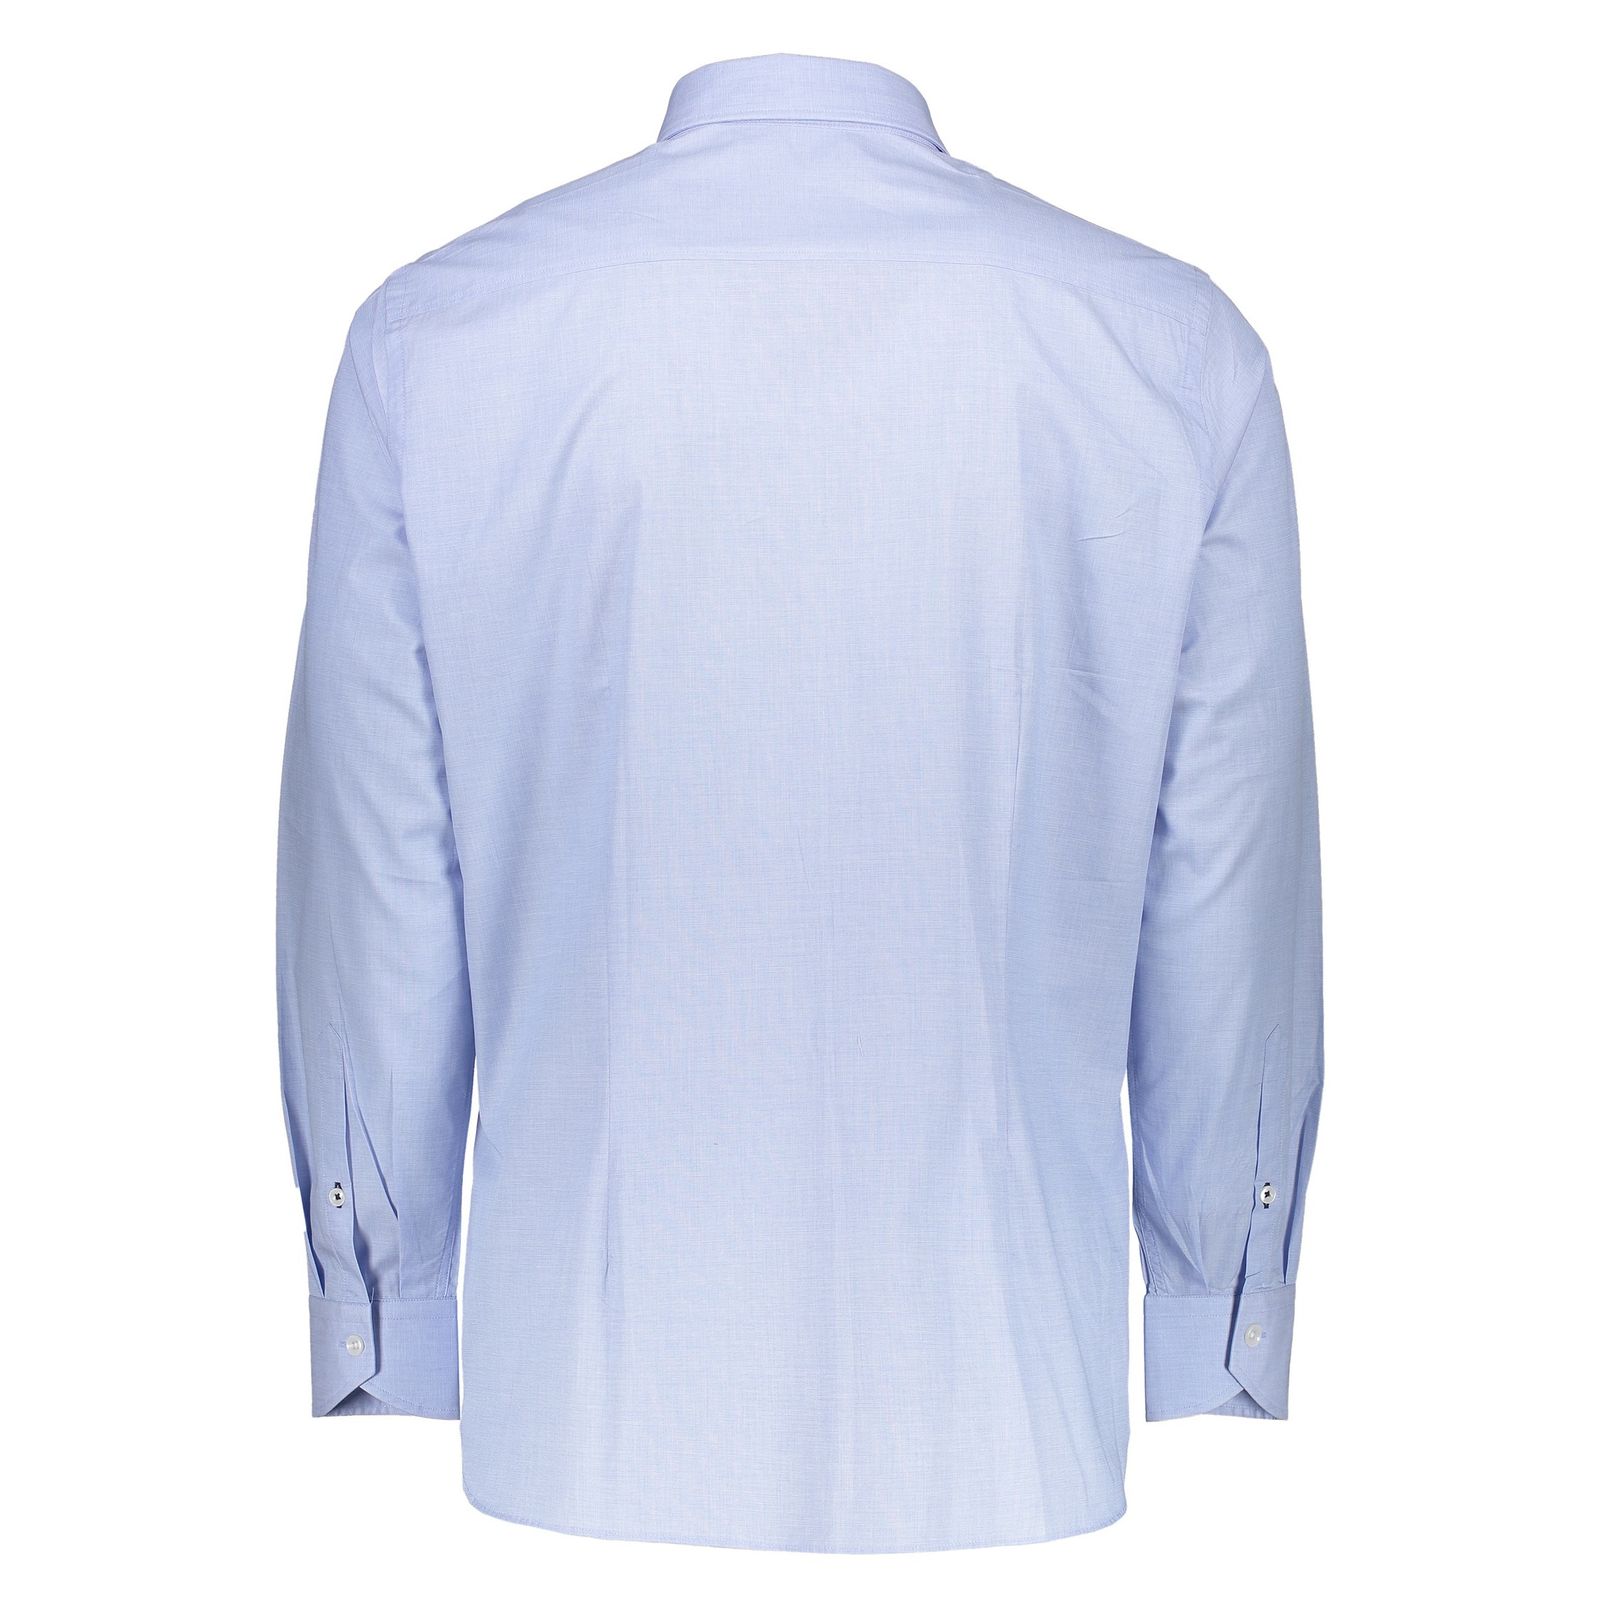 پیراهن رسمی مردانه - مانگو - آبي روشن - 5